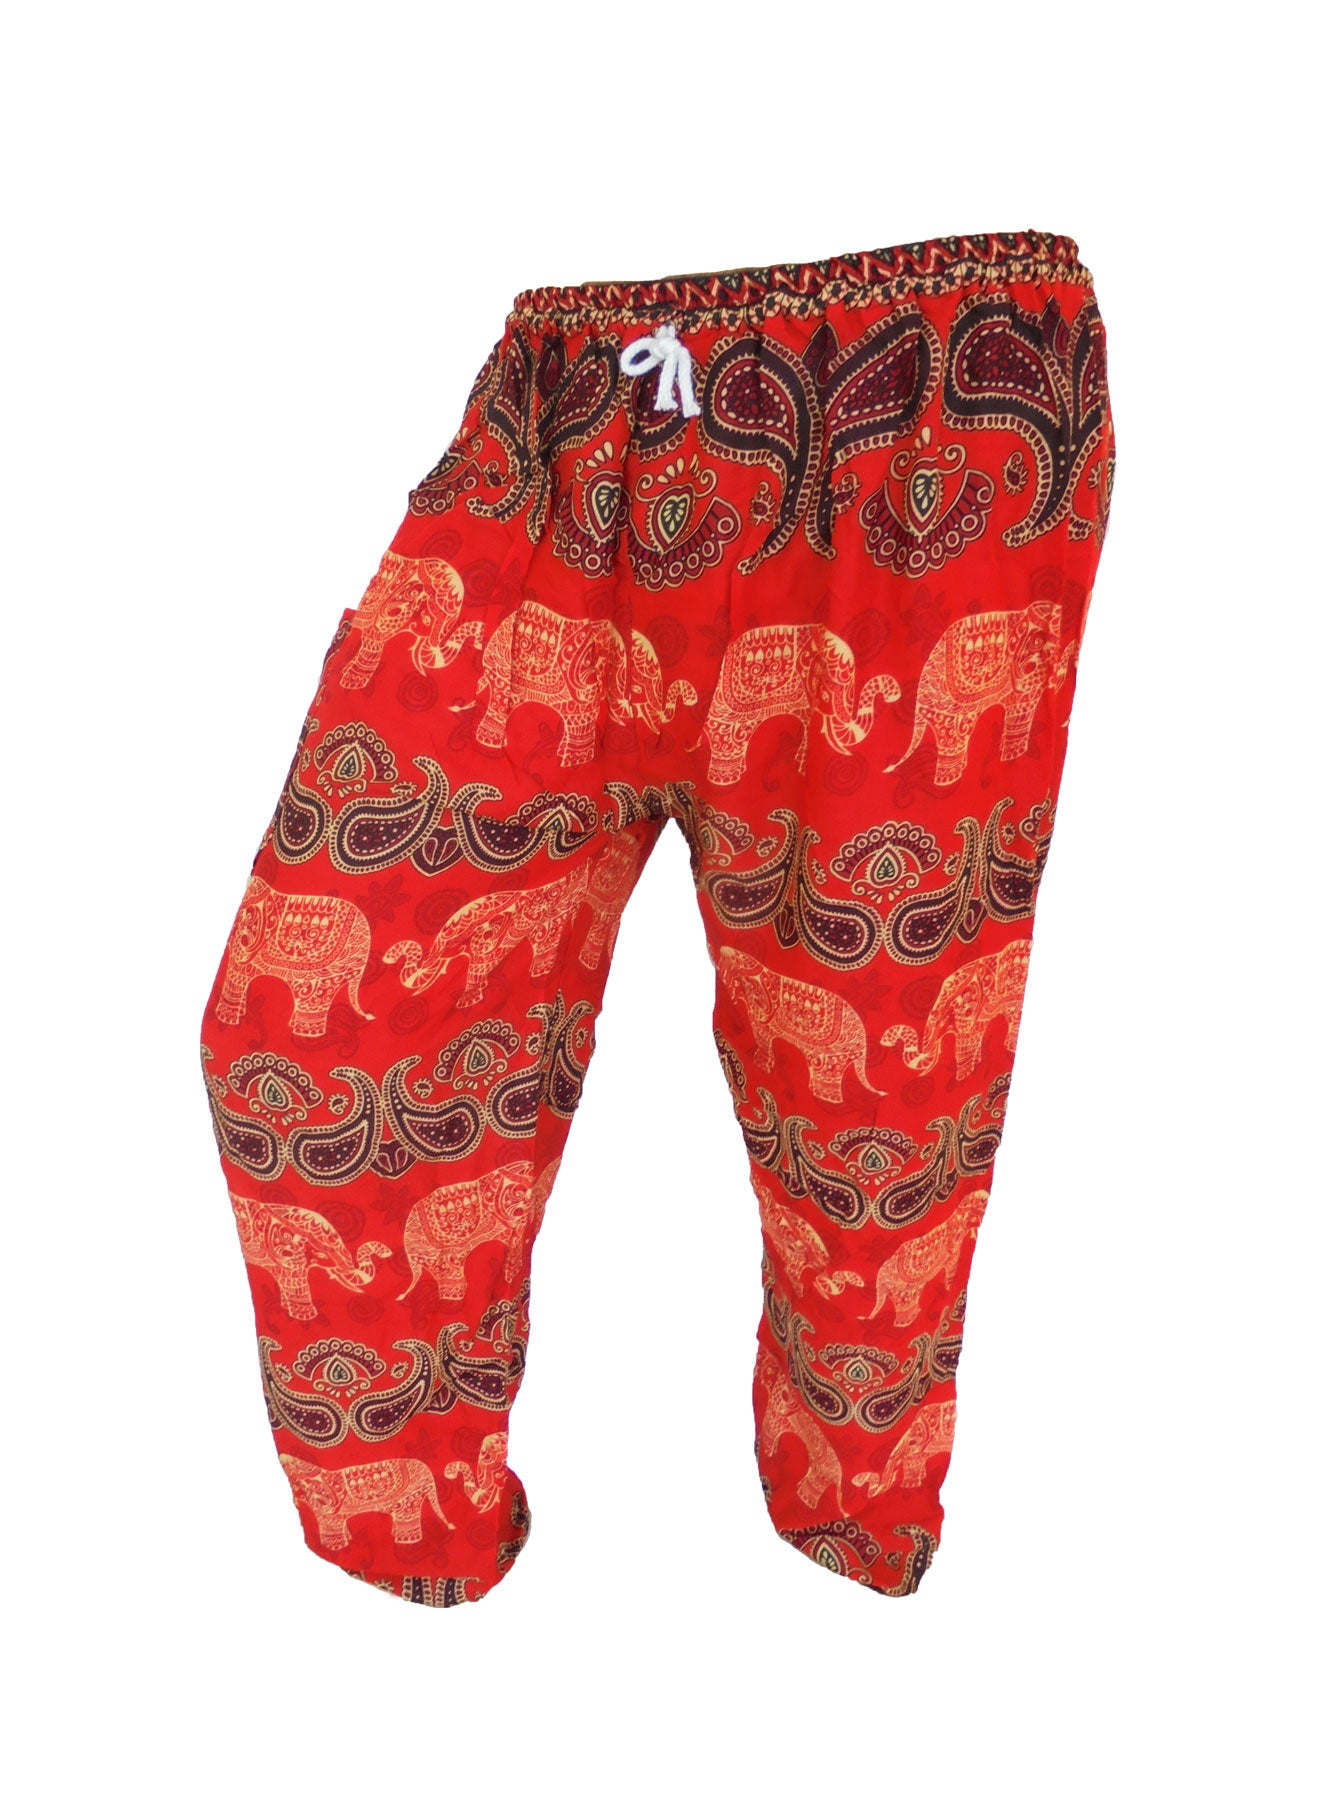 Leisure pants cotton Flexsize SL Elefant Yoga Relaxing many designs and colors